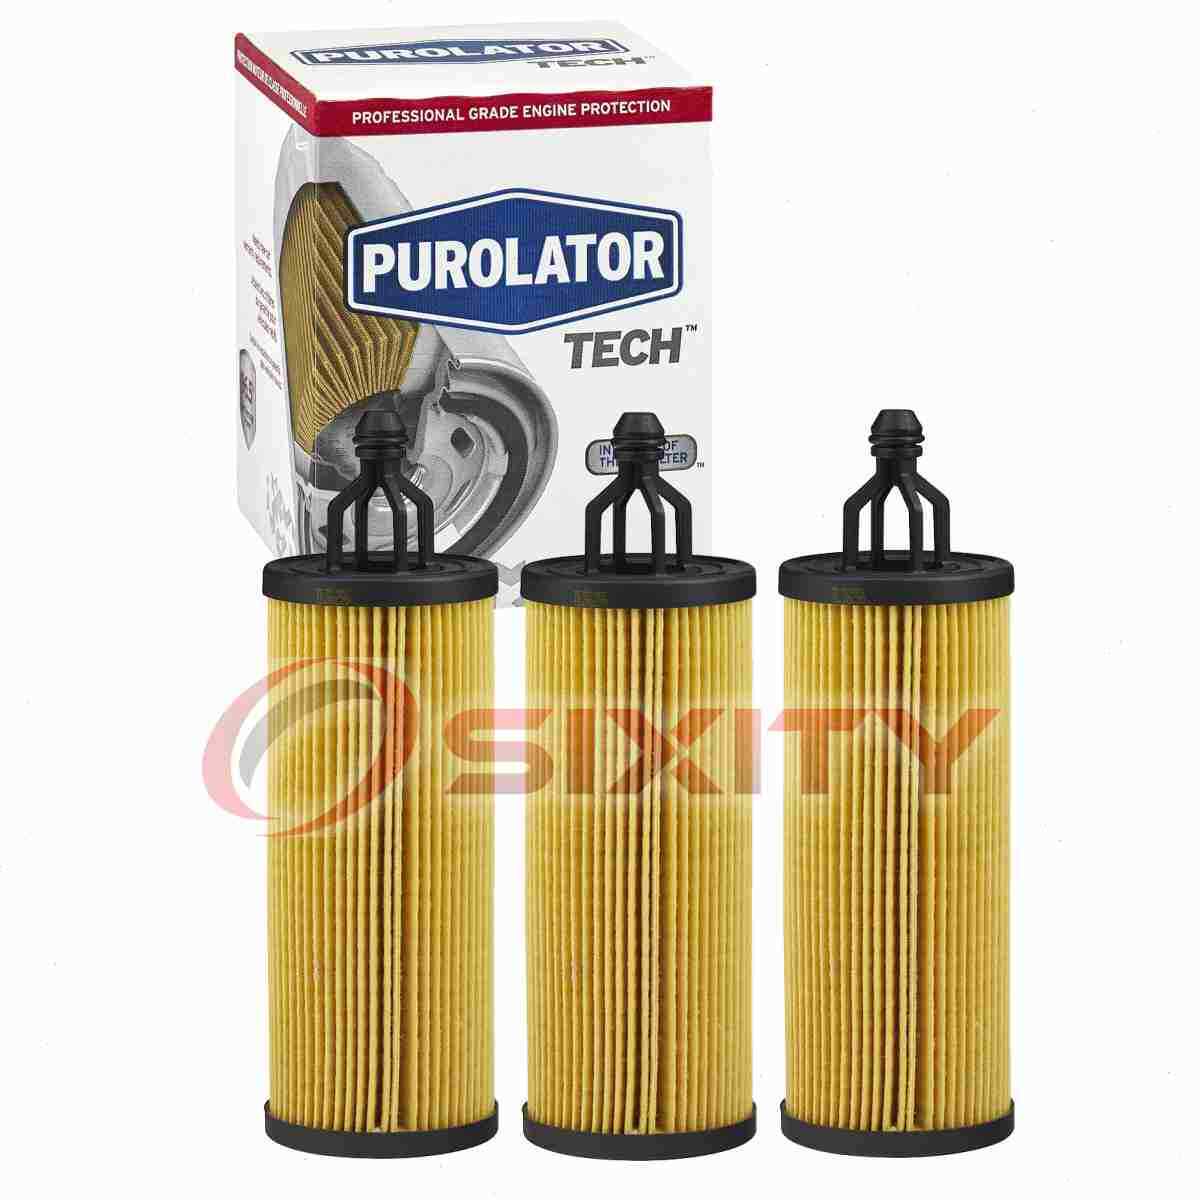 3 pc Purolator TECH TL36296 Engine Oil Filters for XG11665 X10040 WP1009 xz